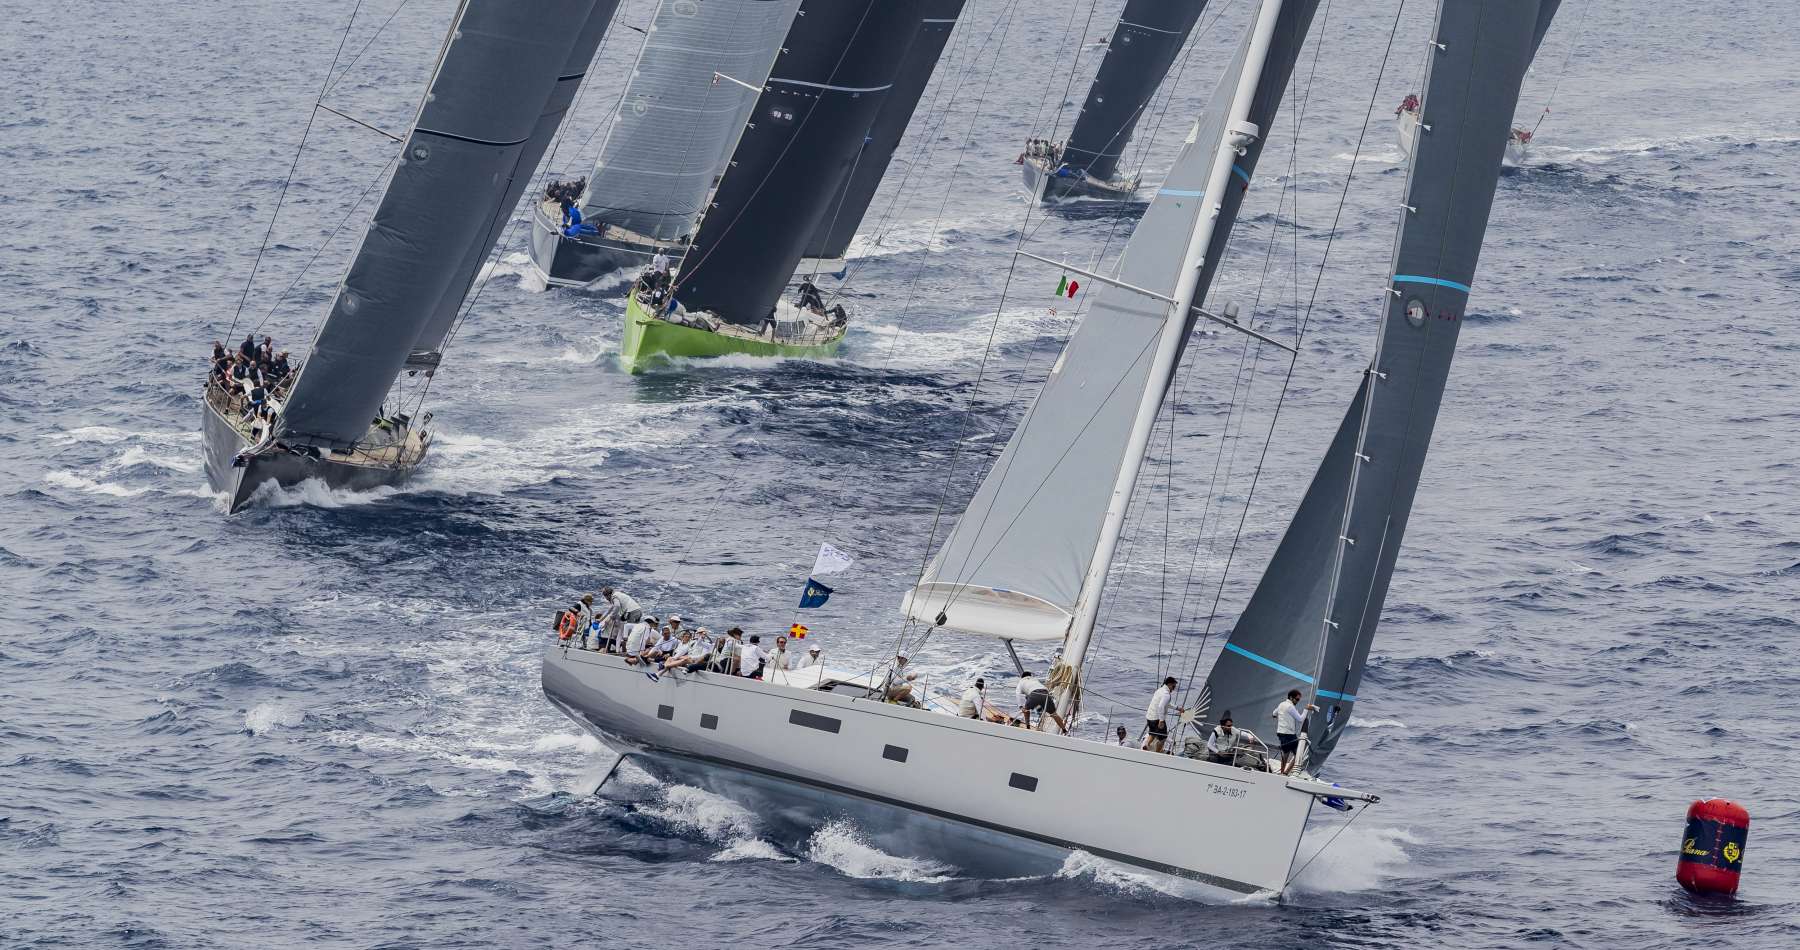 Rankings take shape at Loro Piana Superyacht Regatta  - NEWS - Yacht Club Costa Smeralda